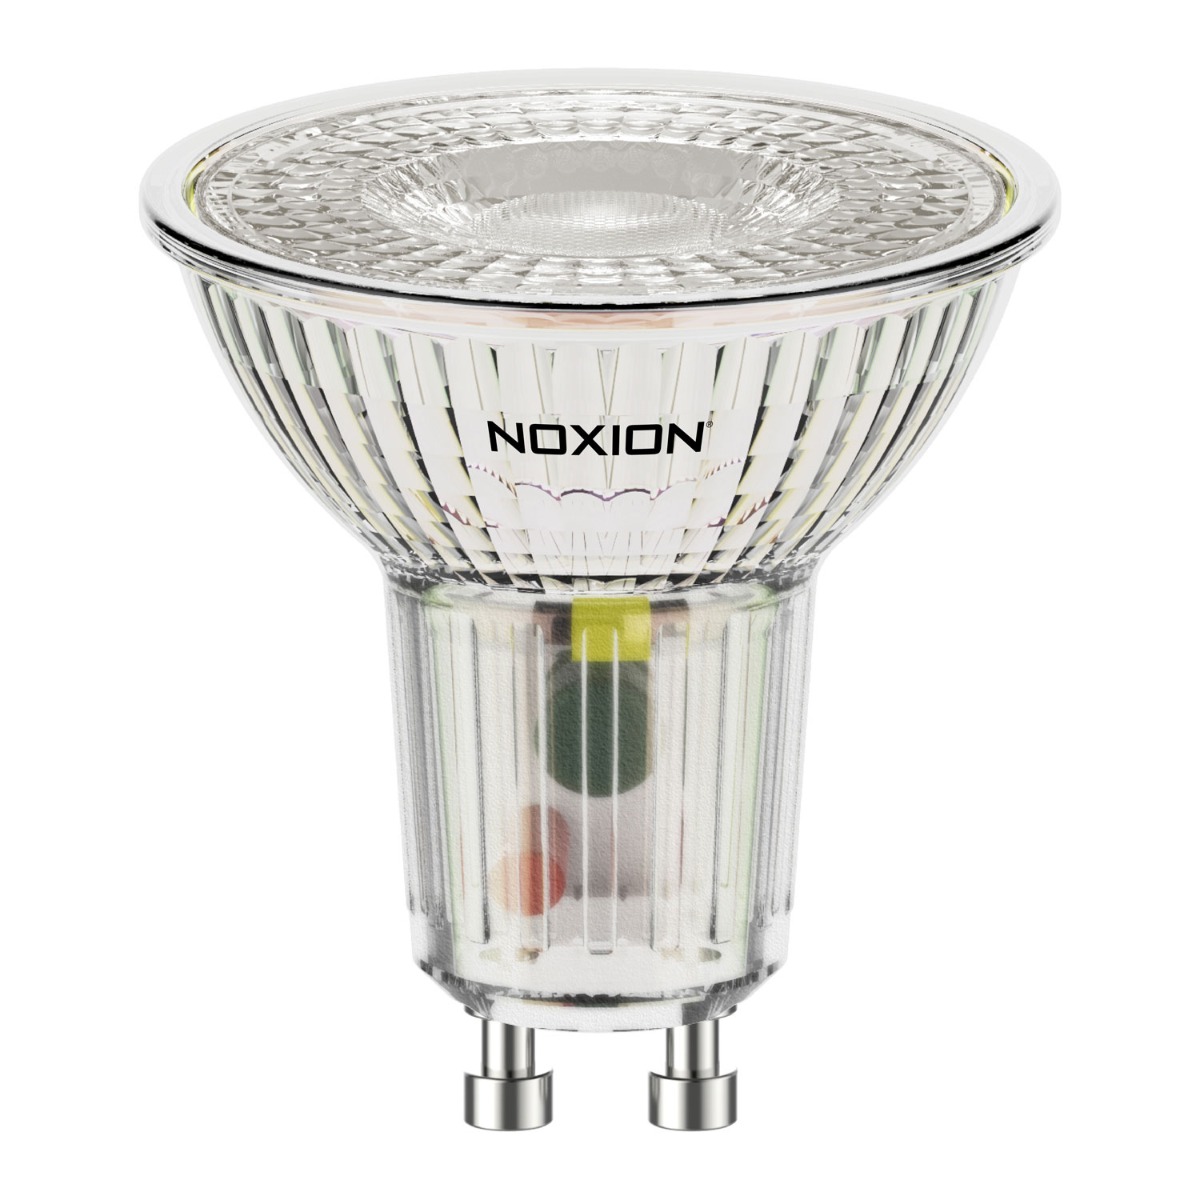 Noxion LED Spot GU10 4W 840 36D 400lm | Replacer for 50W